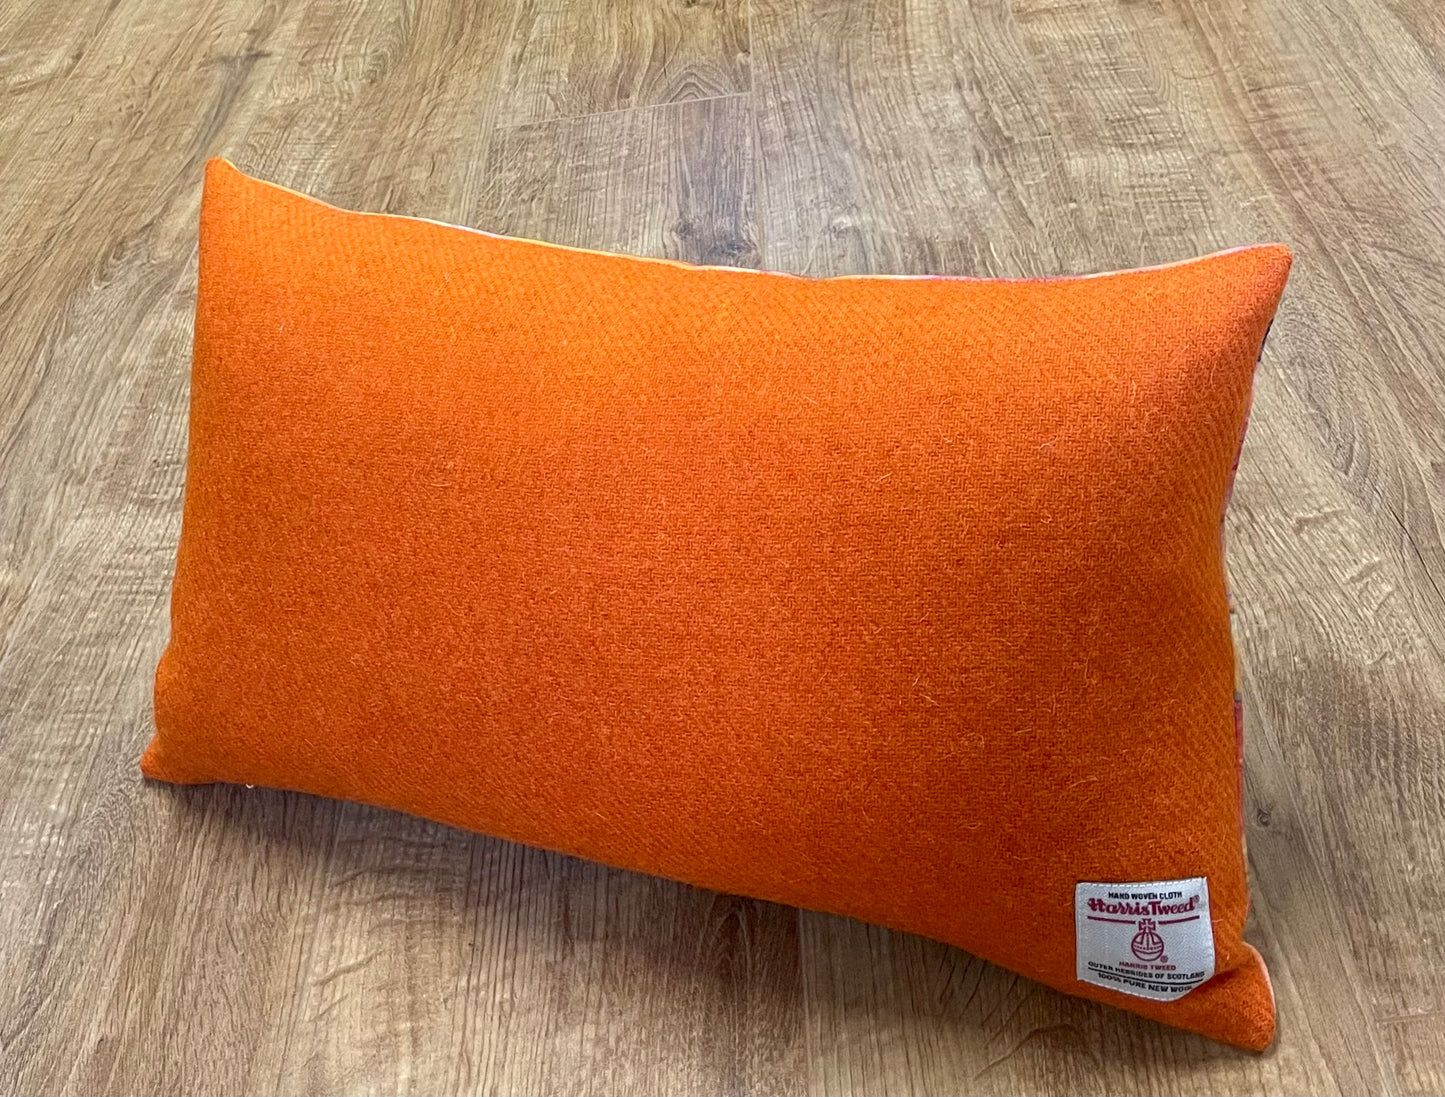 Blue River Velvet and Orange Harris Tweed Oblong Cushion